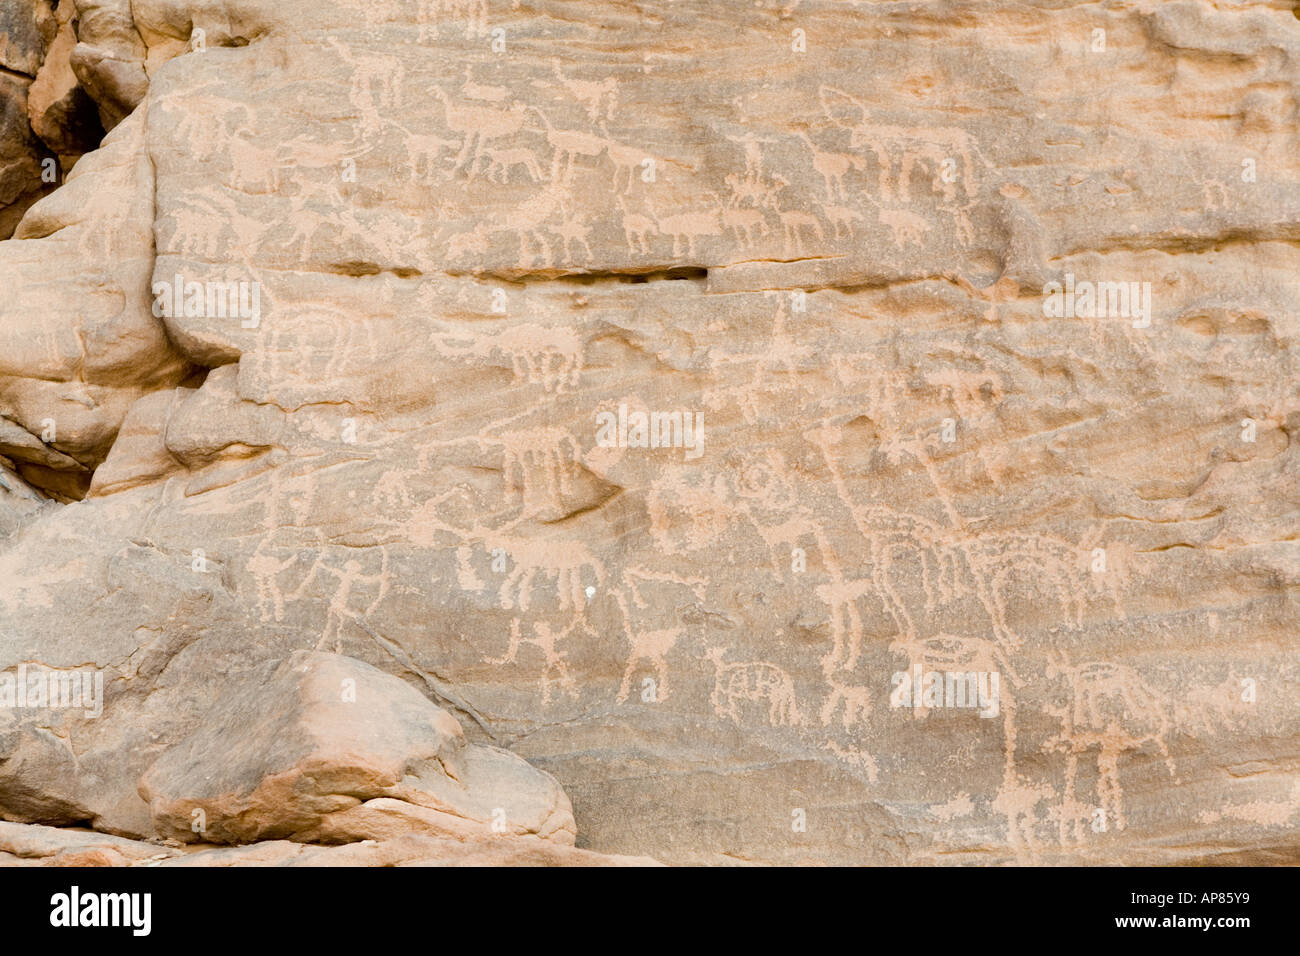 Various animals and figures cut into large rock, Karkhur Talh, Uweinat, Egypt Stock Photo